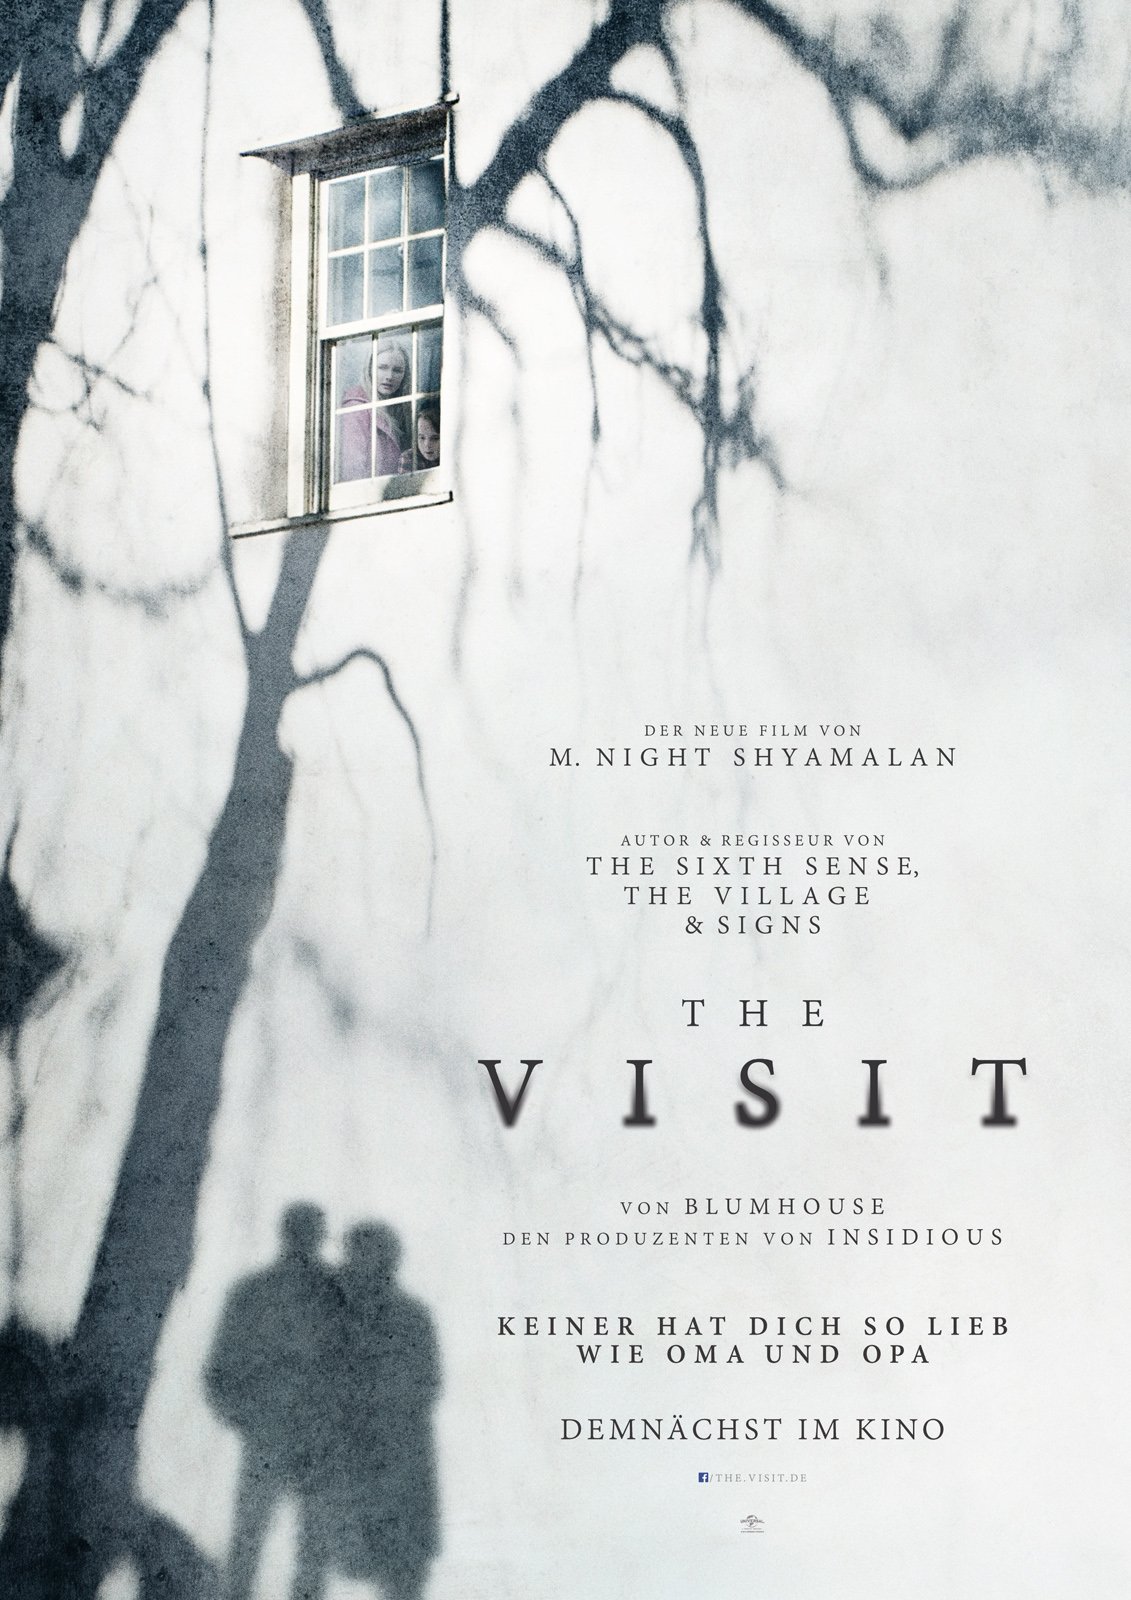 the visit movie 2015